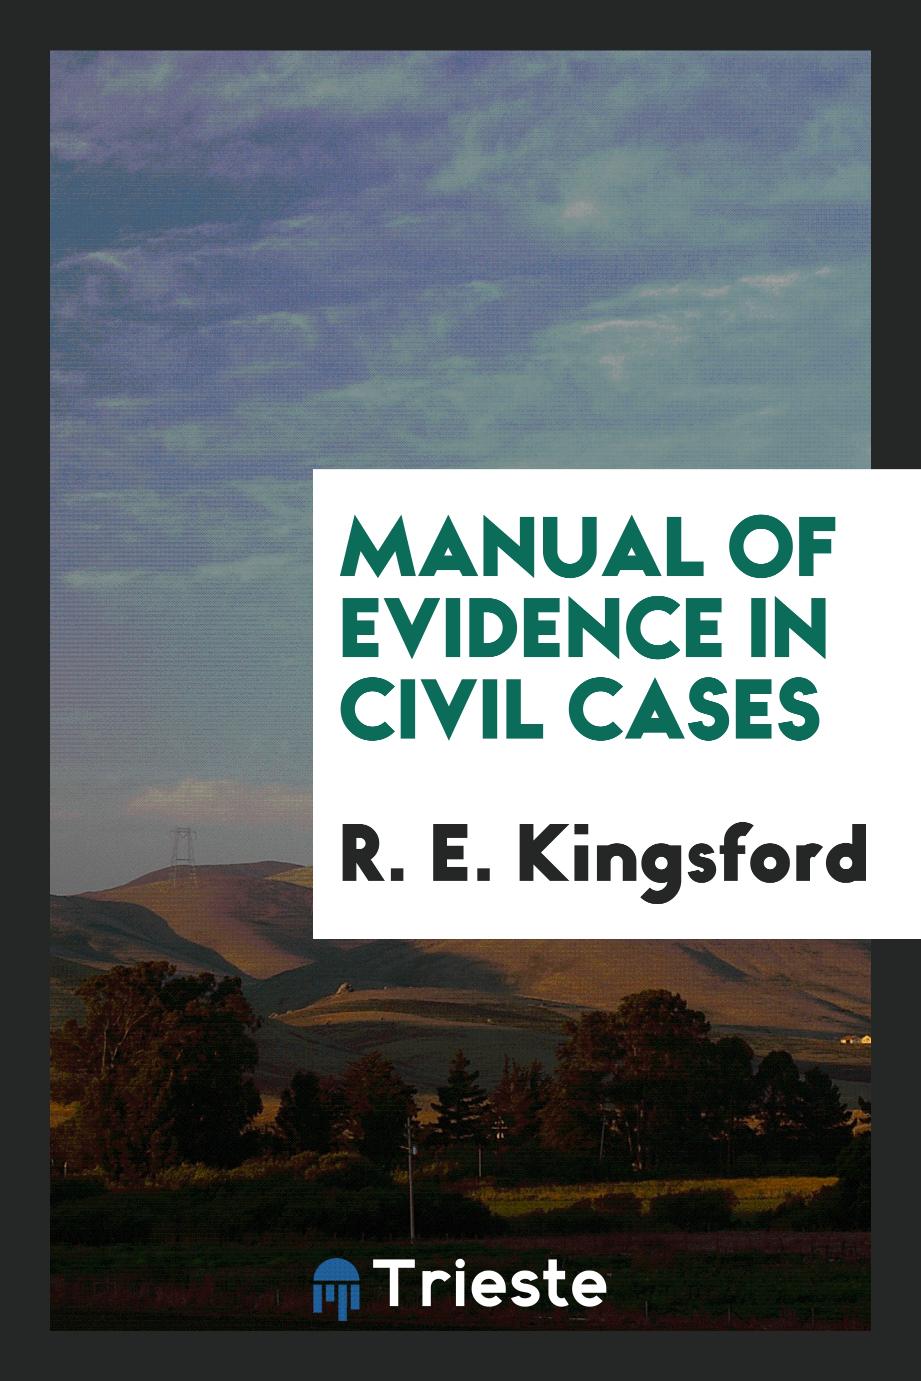 Manual of evidence in civil cases